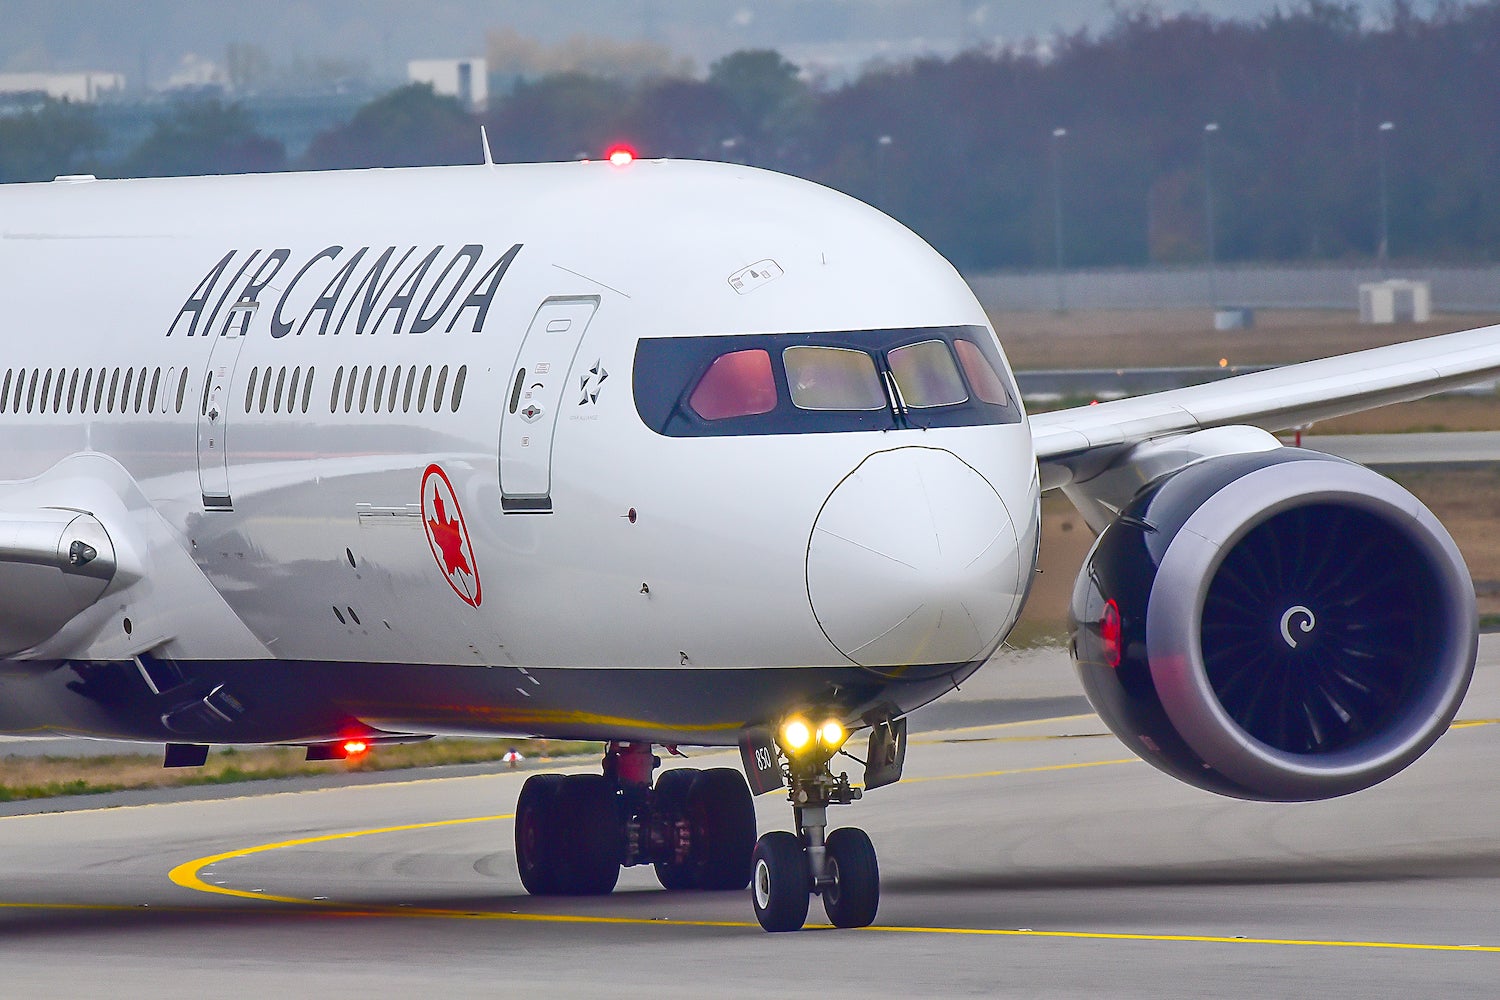 Air Canada 777 at Frankfurt Airport